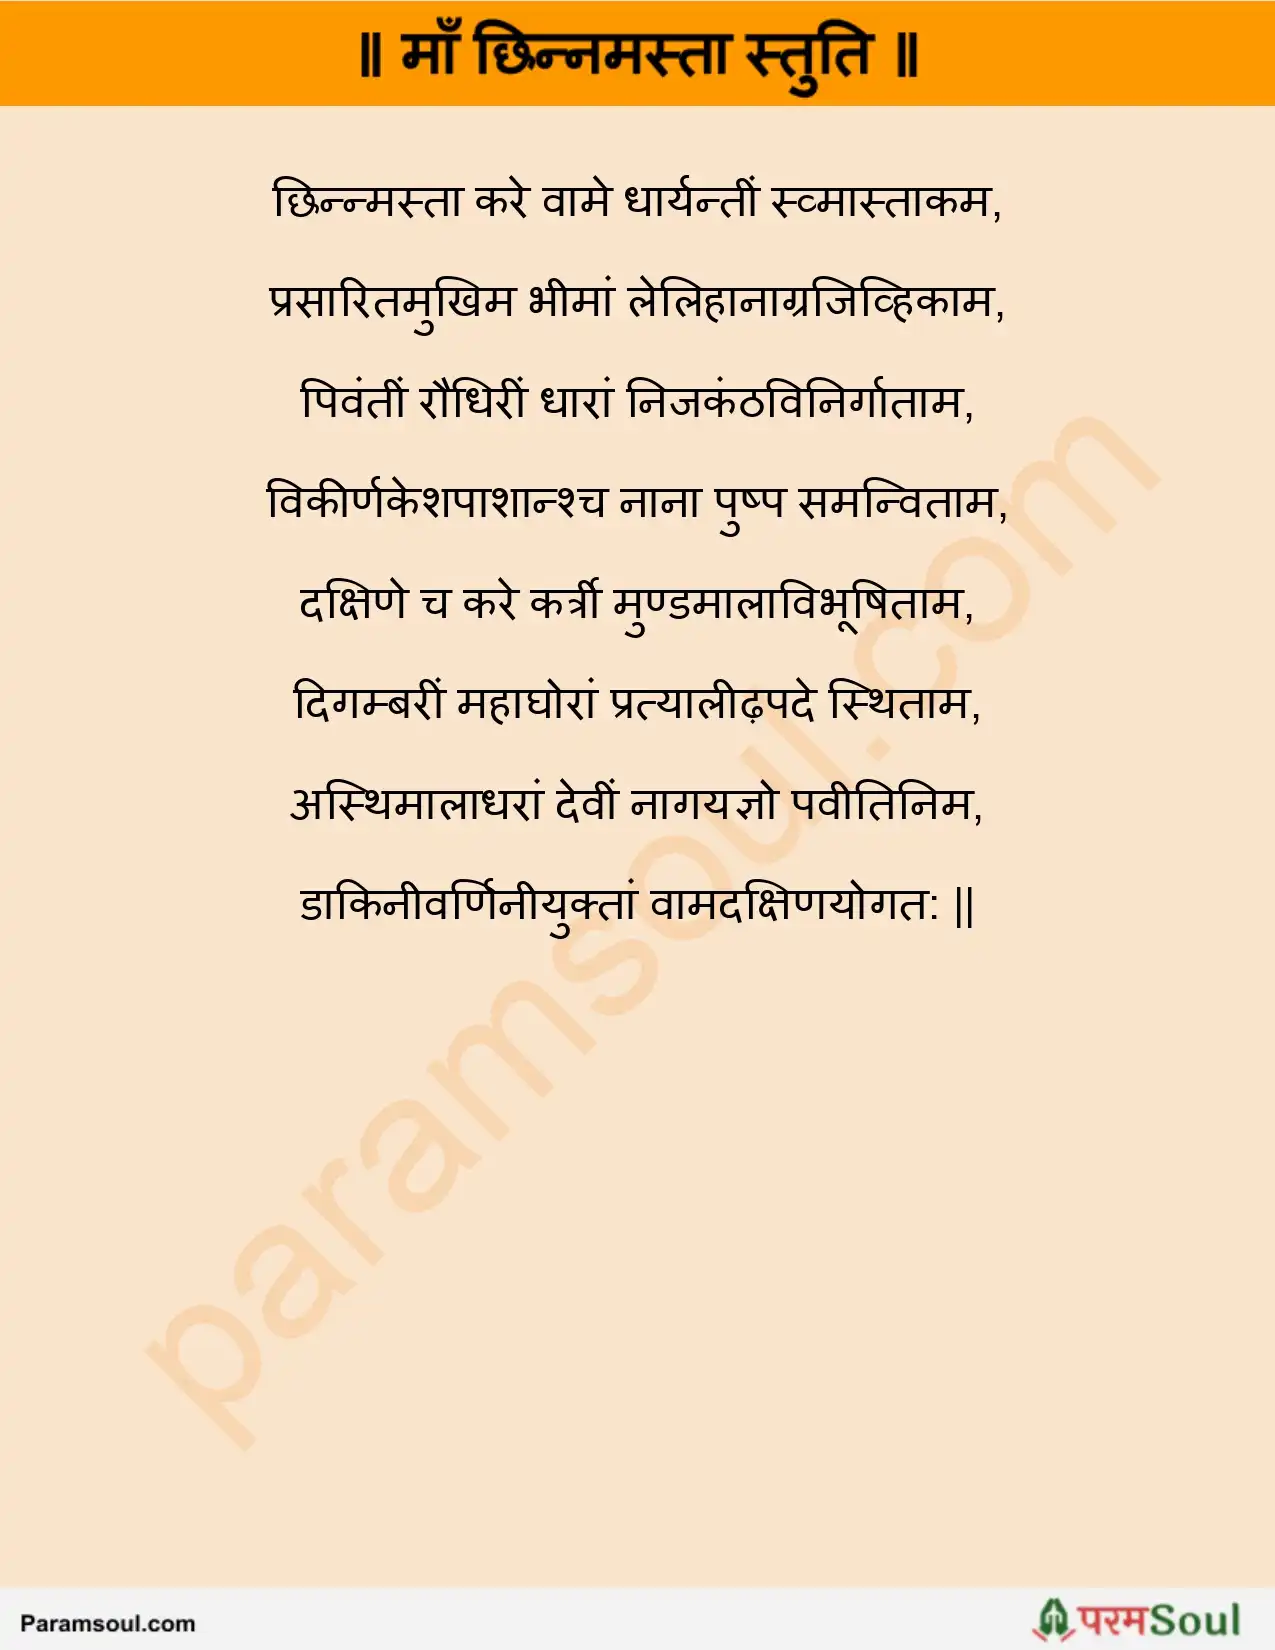 Maa Chhinnamasta Stuti Lyrics - माँ छिन्नमस्ता स्तुति